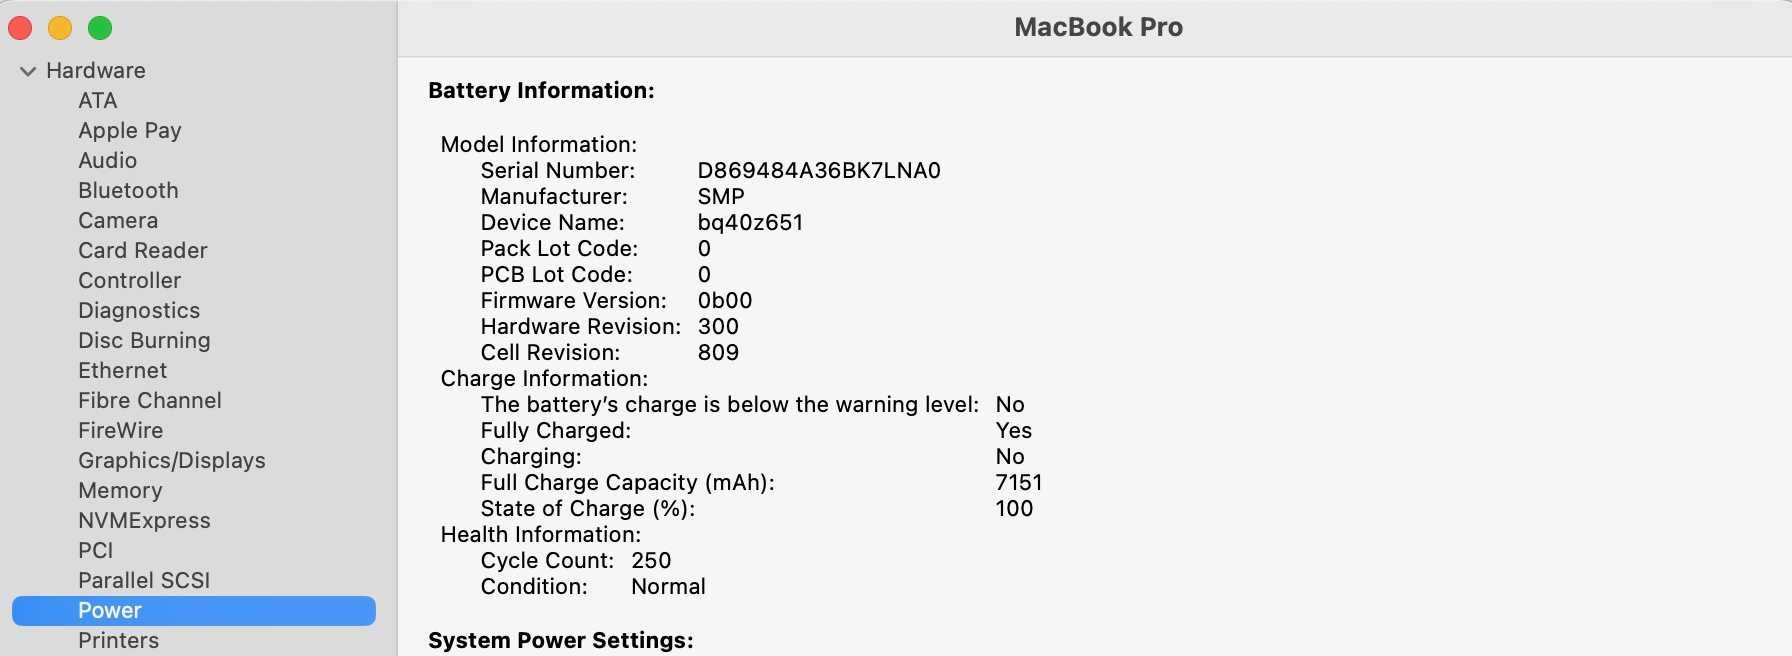 Apple MacBook Pro 16 i7 2,6GHz/16/512/R5300M Space Gray MVVJ2ZE/A